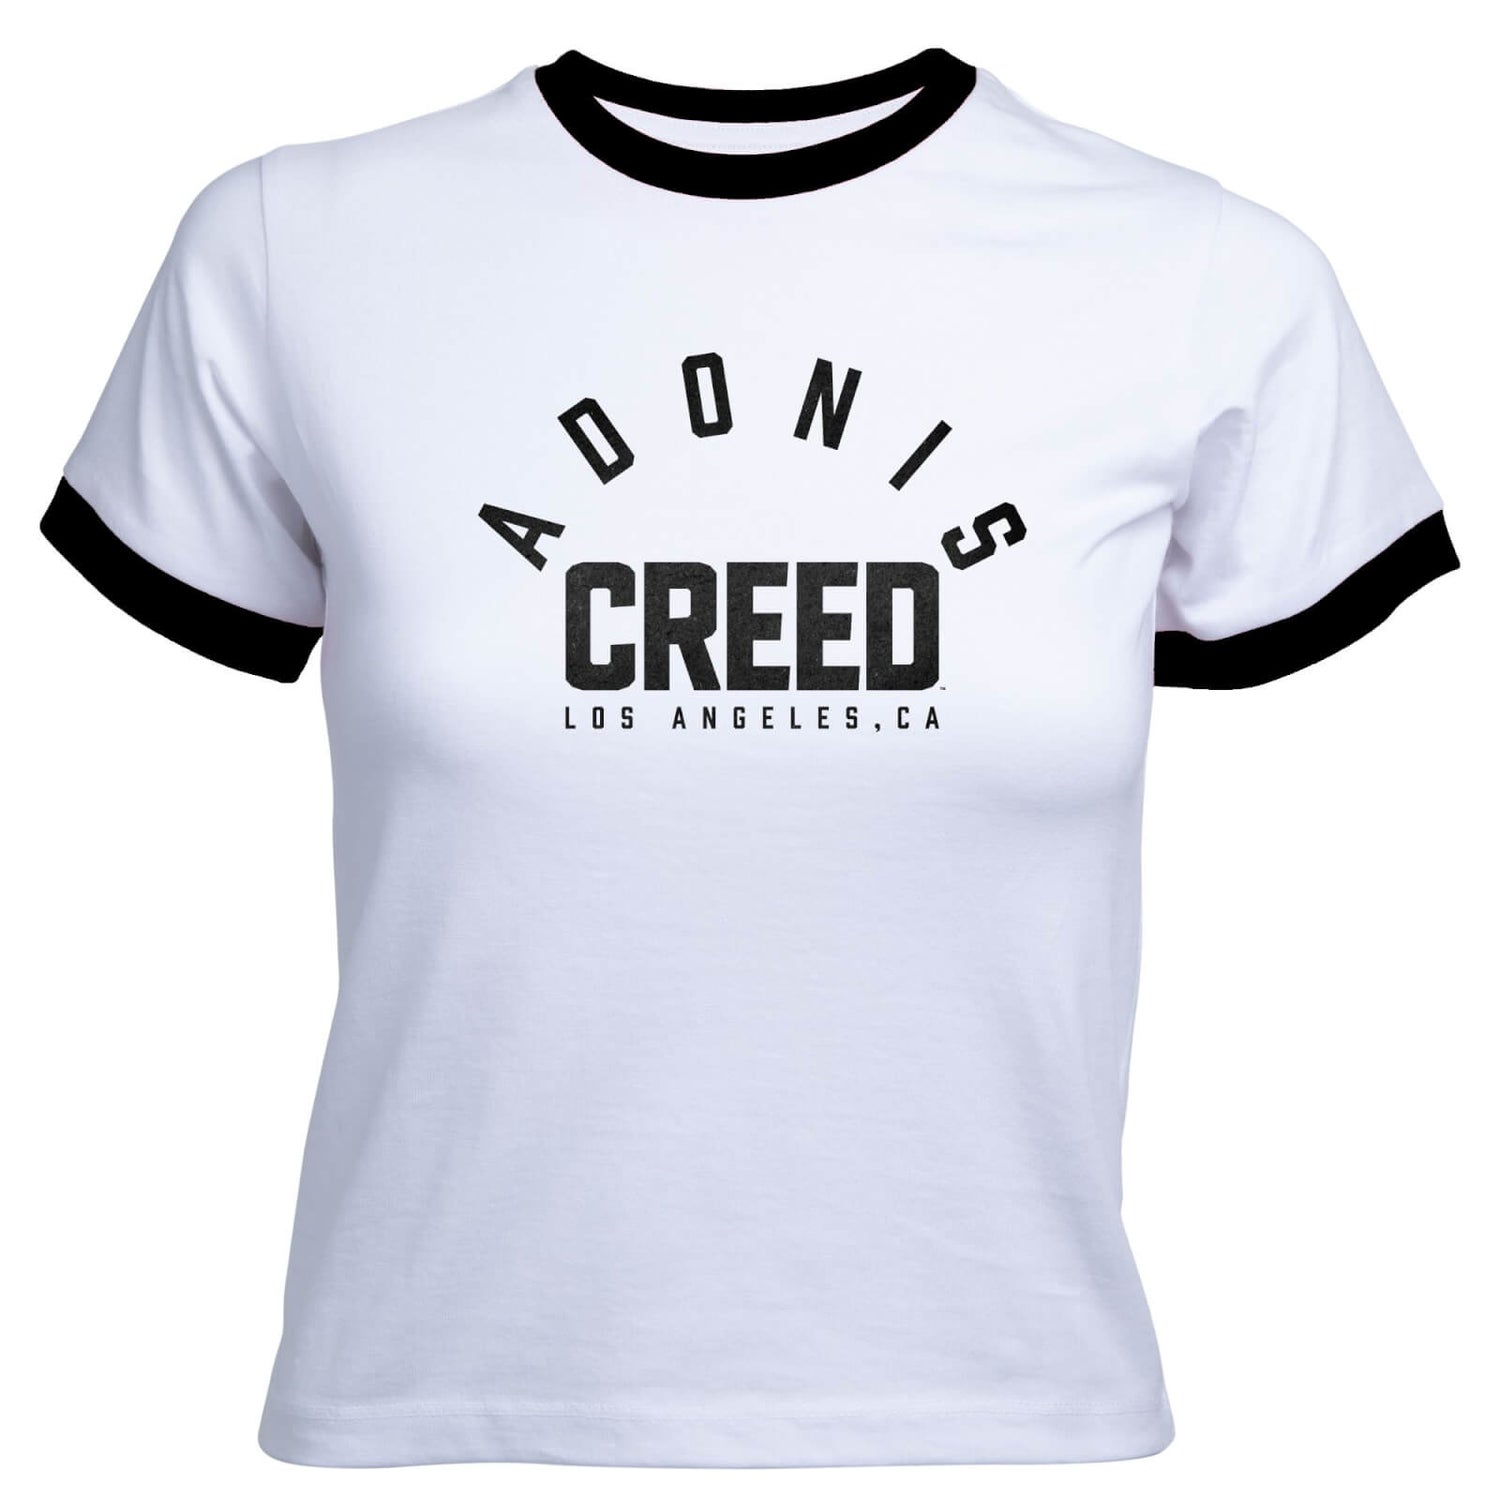 Creed Adonis Creed LA Women's Cropped Ringer T-Shirt - White Black